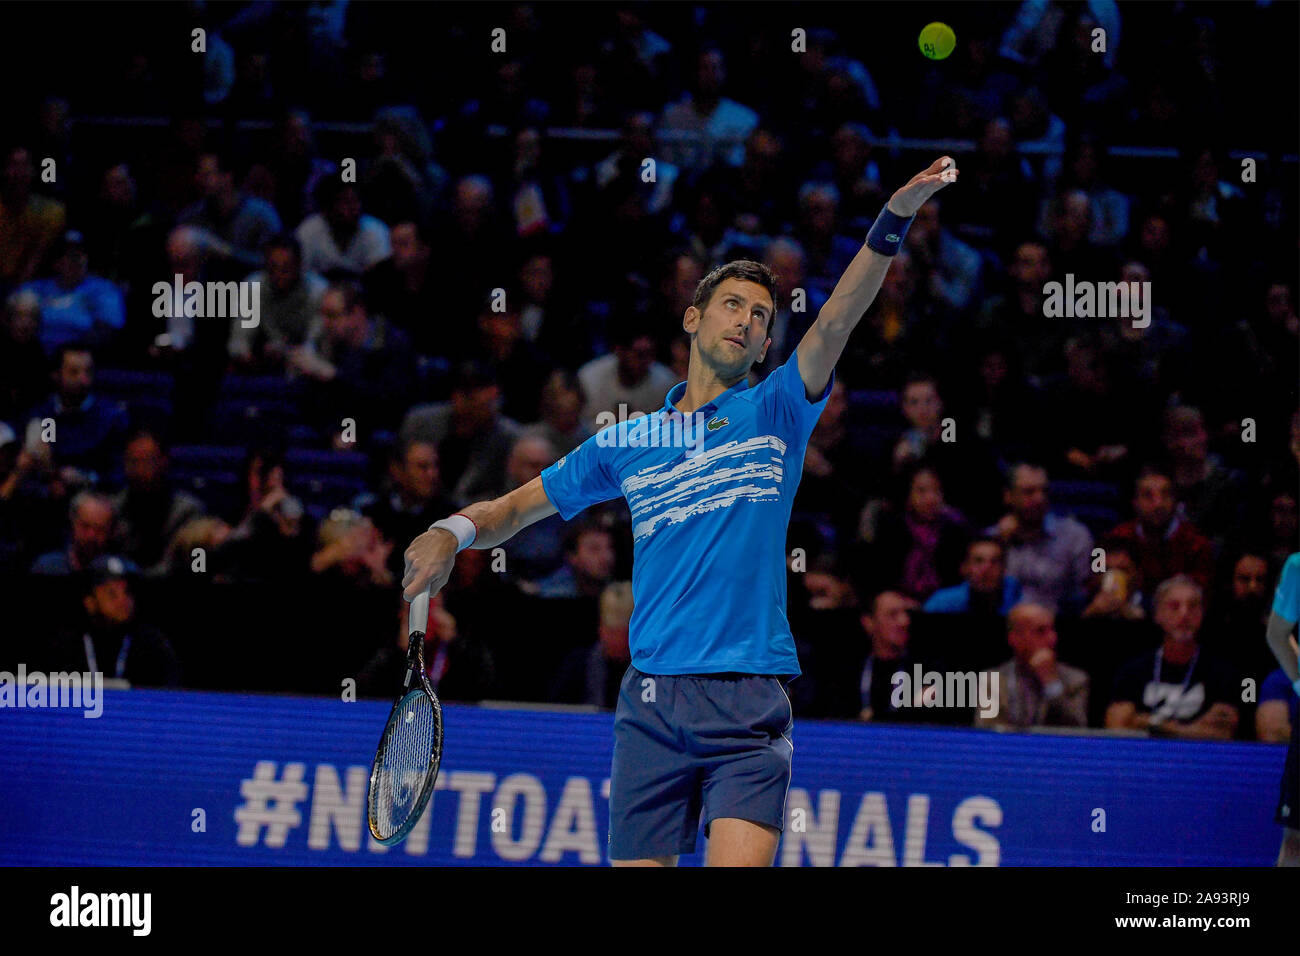 Londra, UK, 12 Nov 2019, nole djokovic ,srb, durante Nitto ATP Finals - Novak Đokovic Vs Dominic Thiem - Tennis intenzionali - Credito: LPS/Roberto Zanettin/Alamy Live News Foto Stock